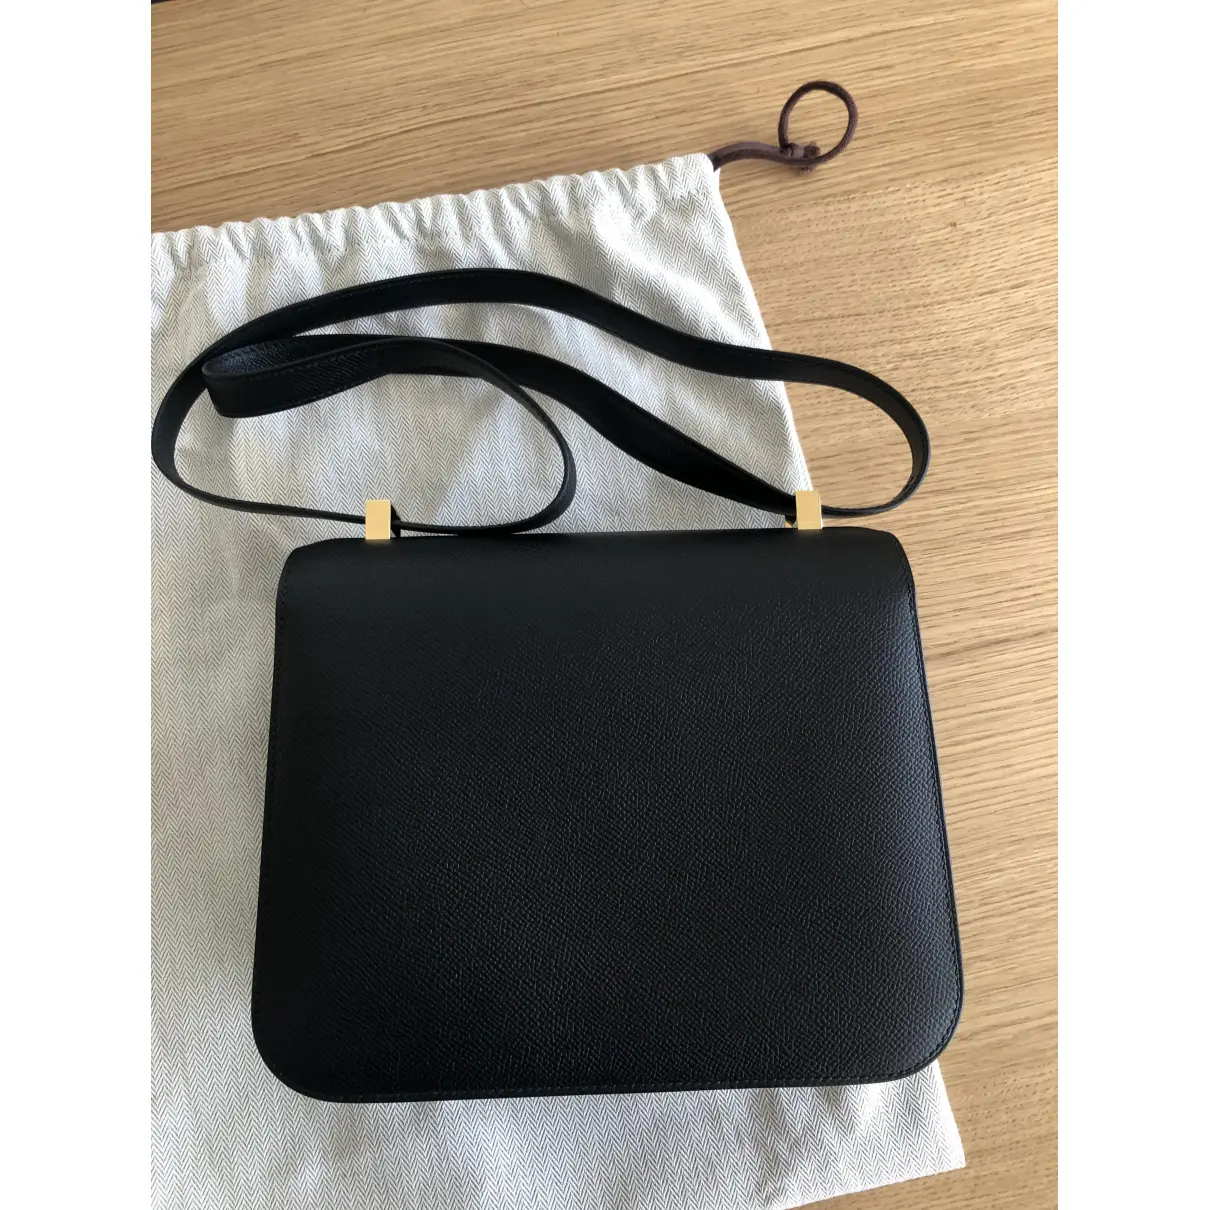 Buy Hermès Constance leather handbag online